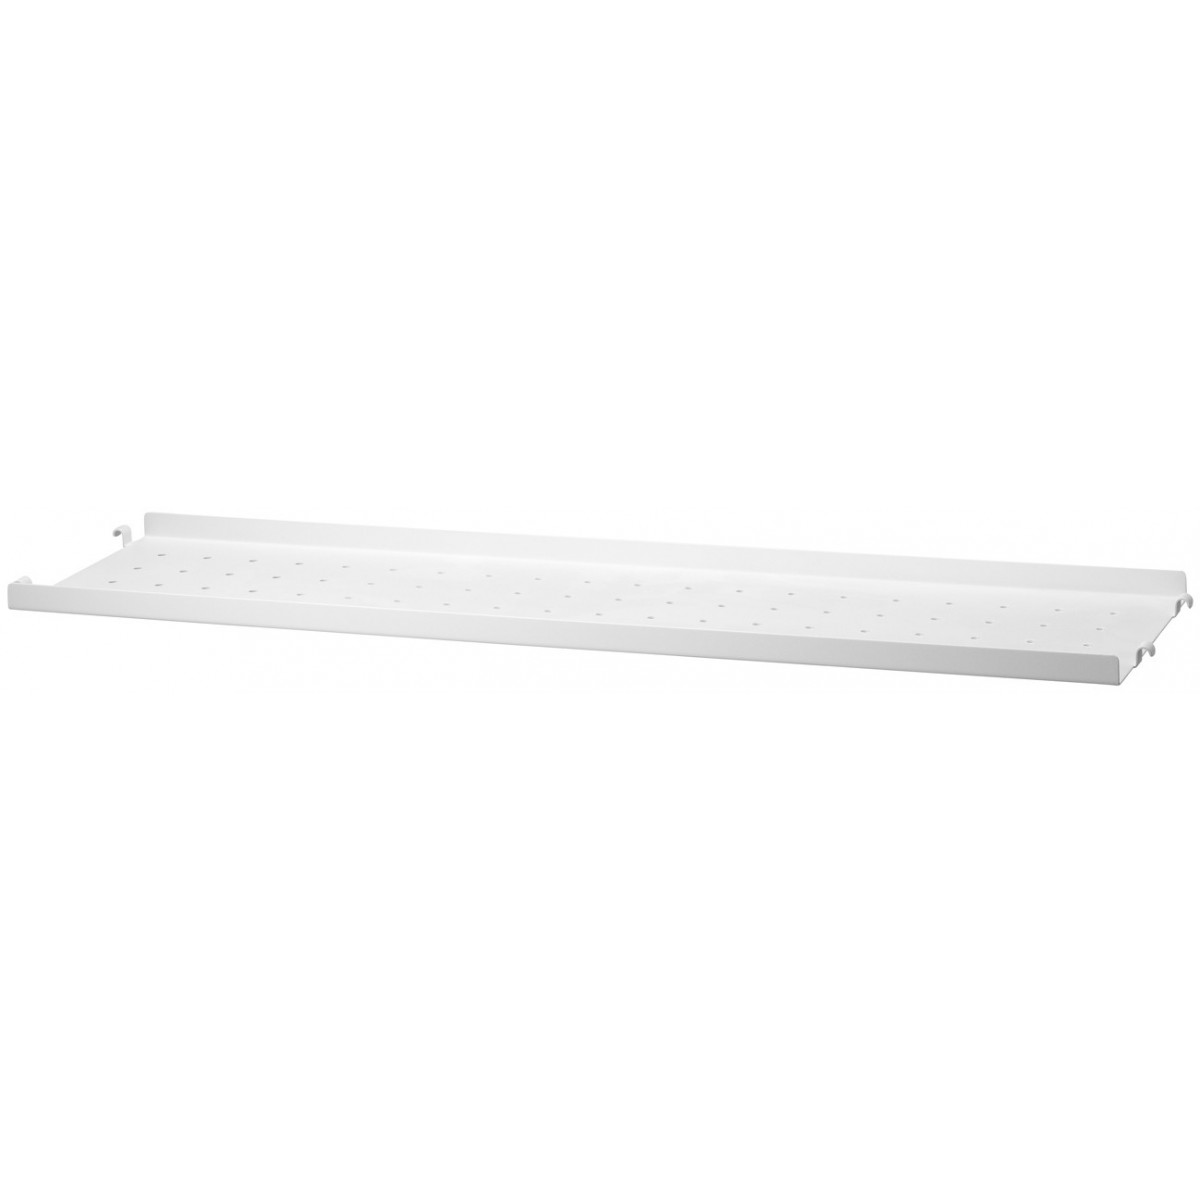 78x20cm - metal shelf, low edge - white